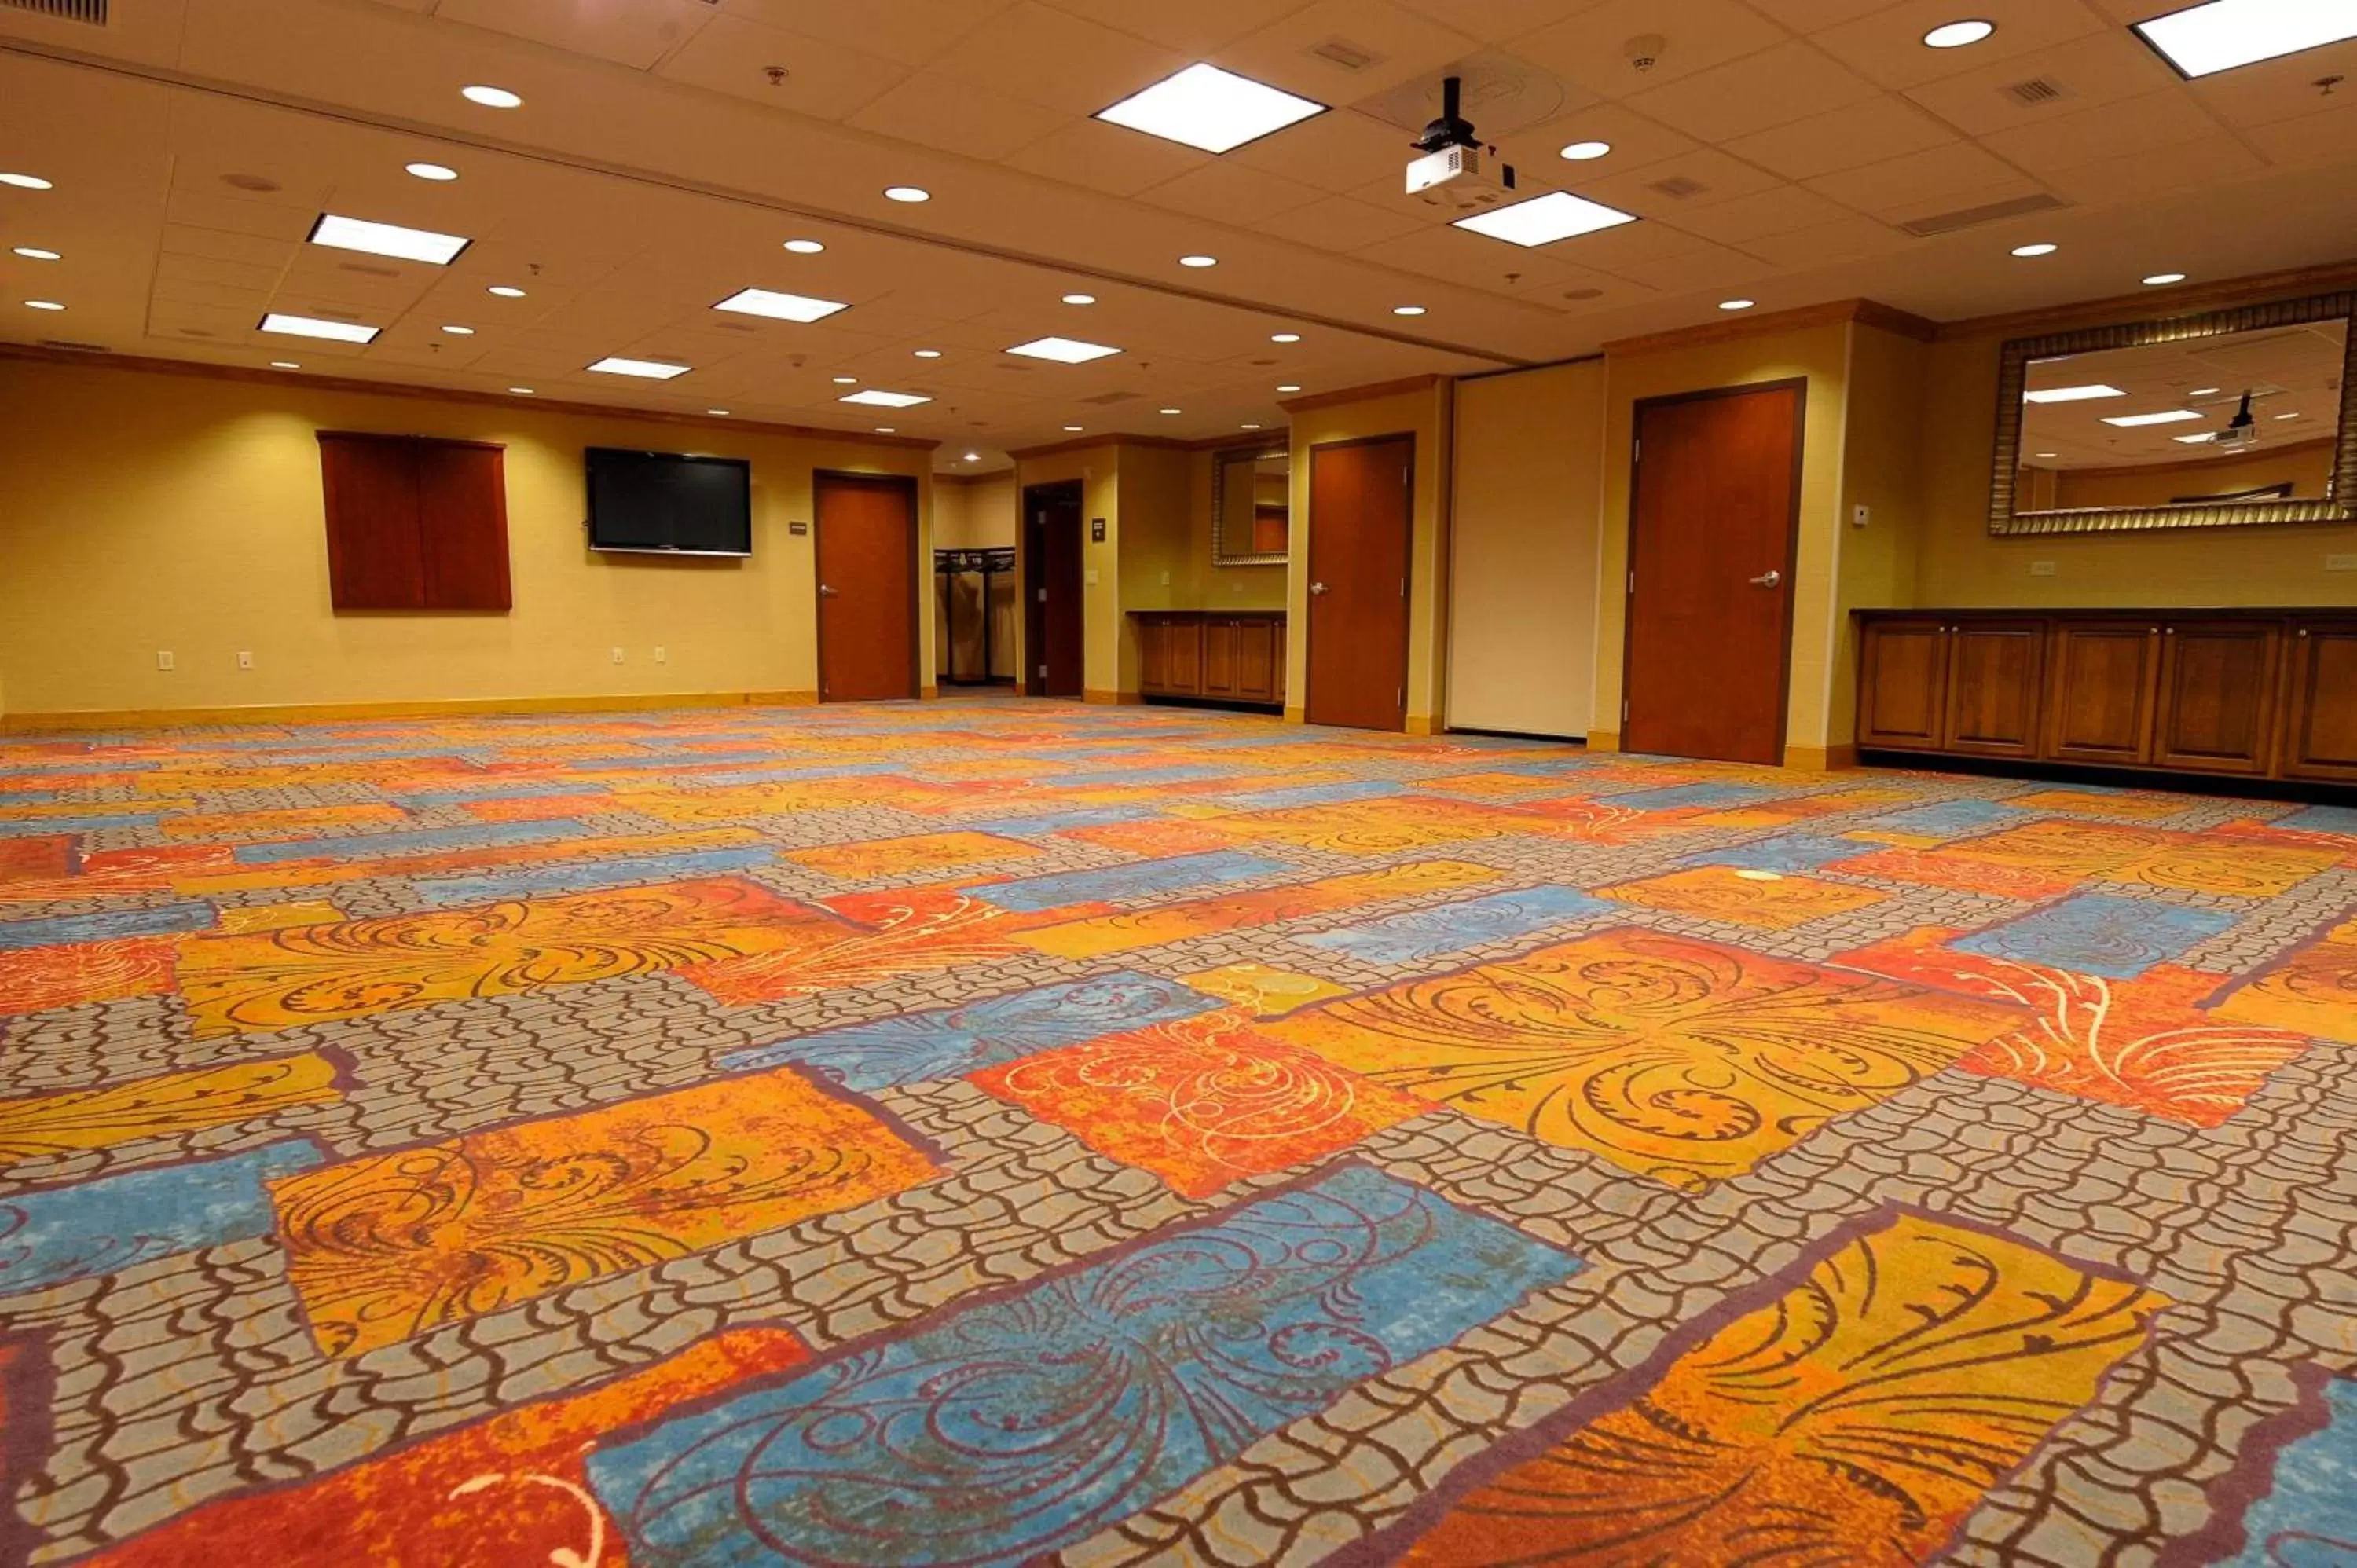 Meeting/conference room, Banquet Facilities in Hampton Inn & Suites Craig, CO